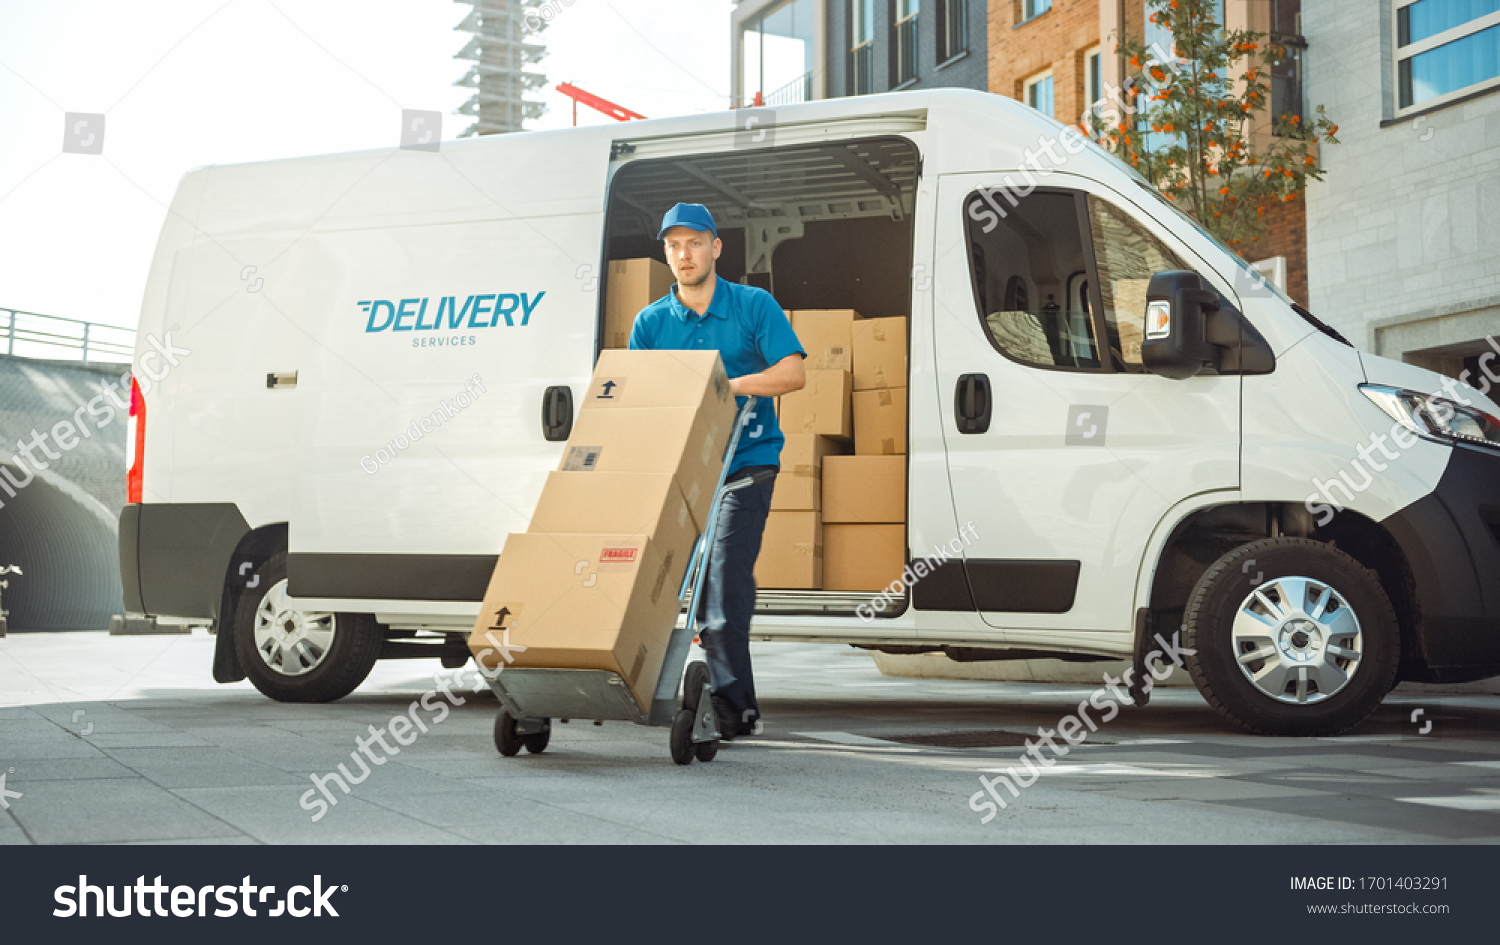 Delivery truck Images, Stock Photos & Vectors | Shutterstock